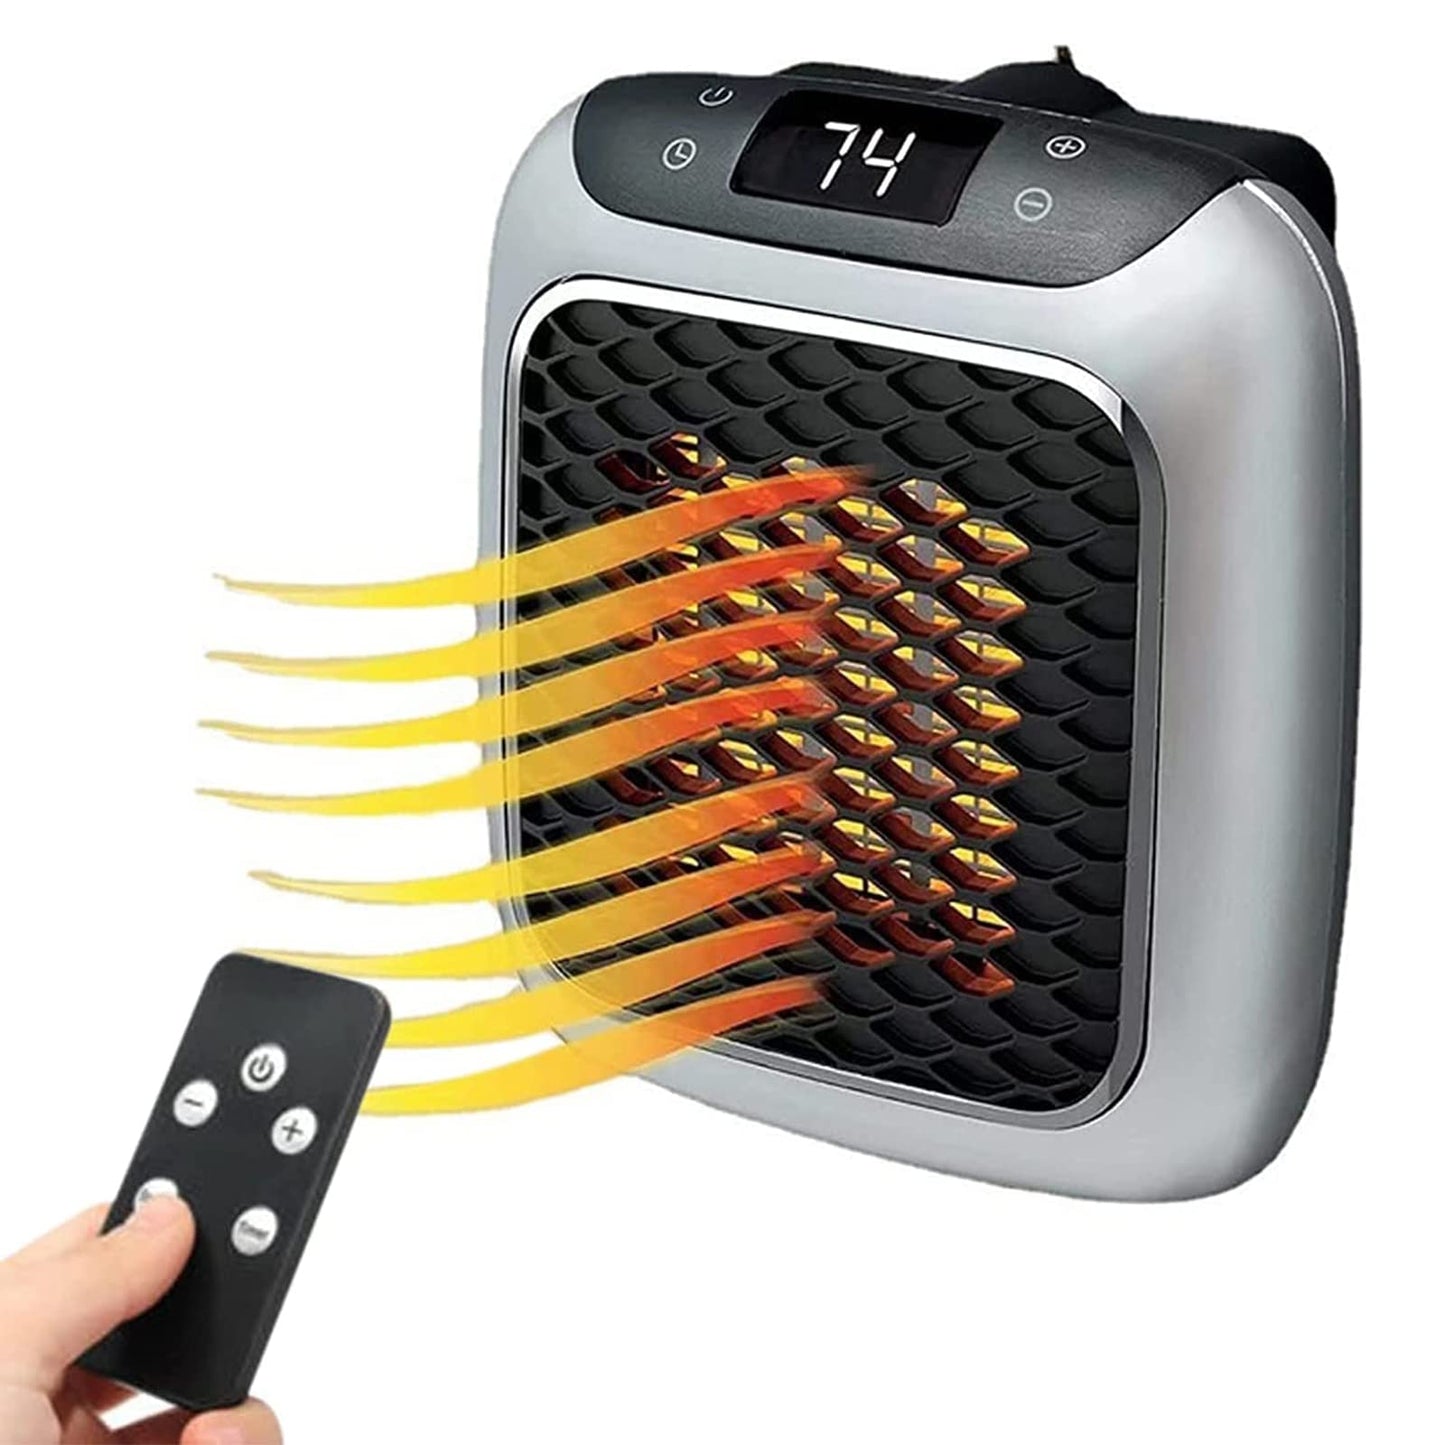 Smart Ceramic Heater